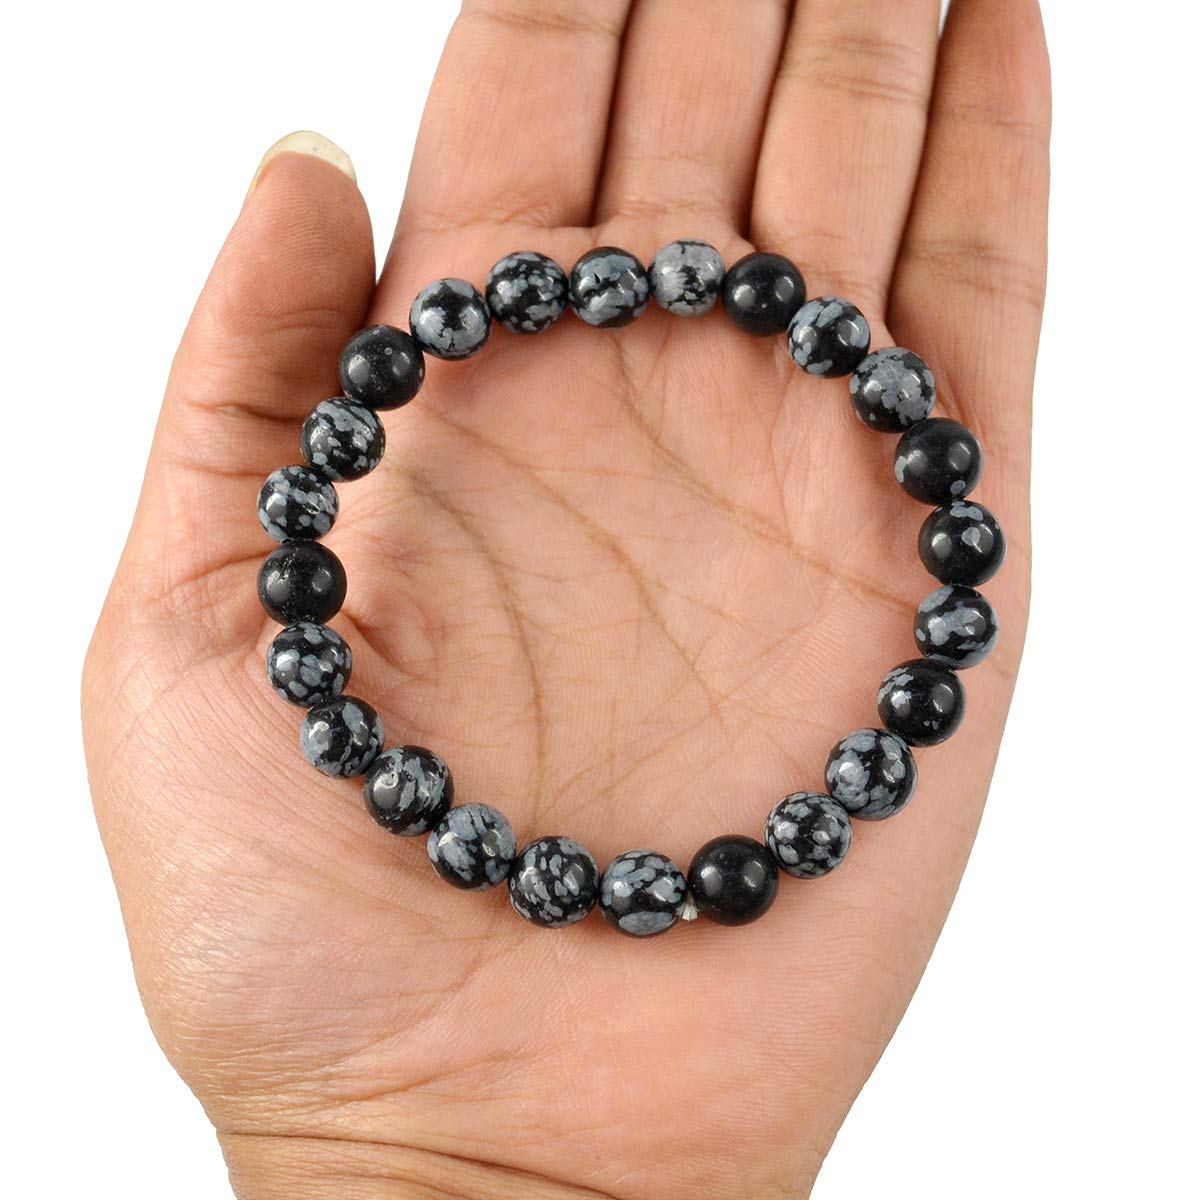 Snowflake Obsidian Natural Healing Crystal Bracelet - 8mm Round Beads - Beaded Bracelet